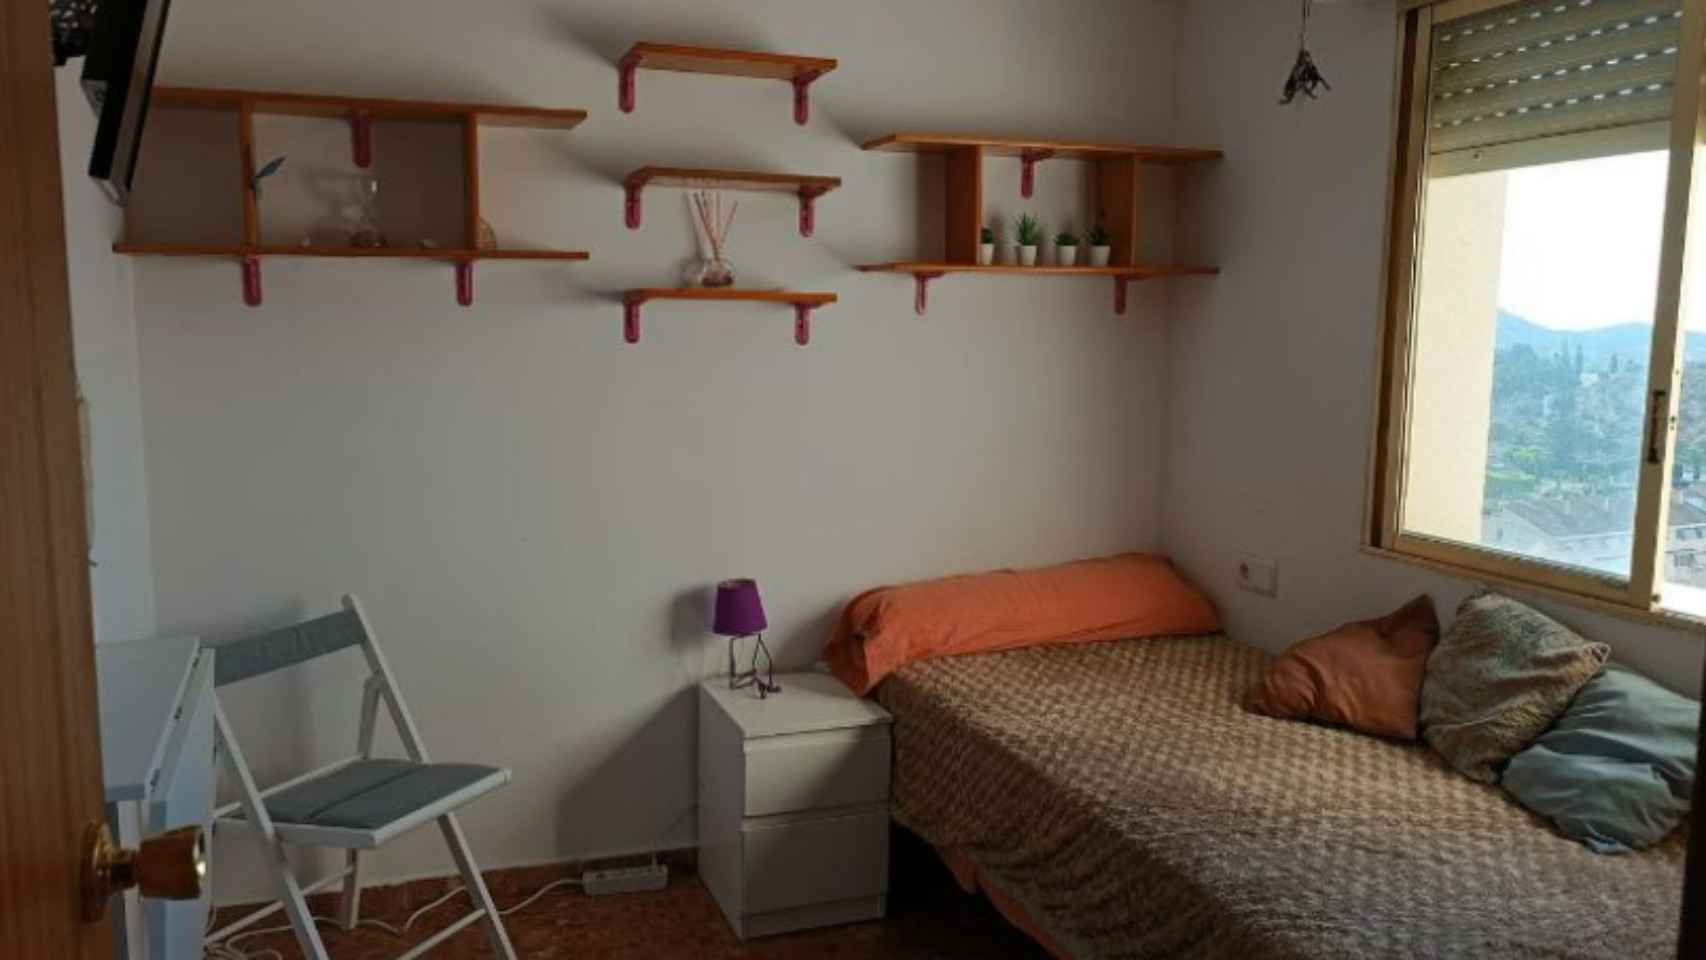 Habitación en calle Curriacán (Alicante), disponible por 425 euros.